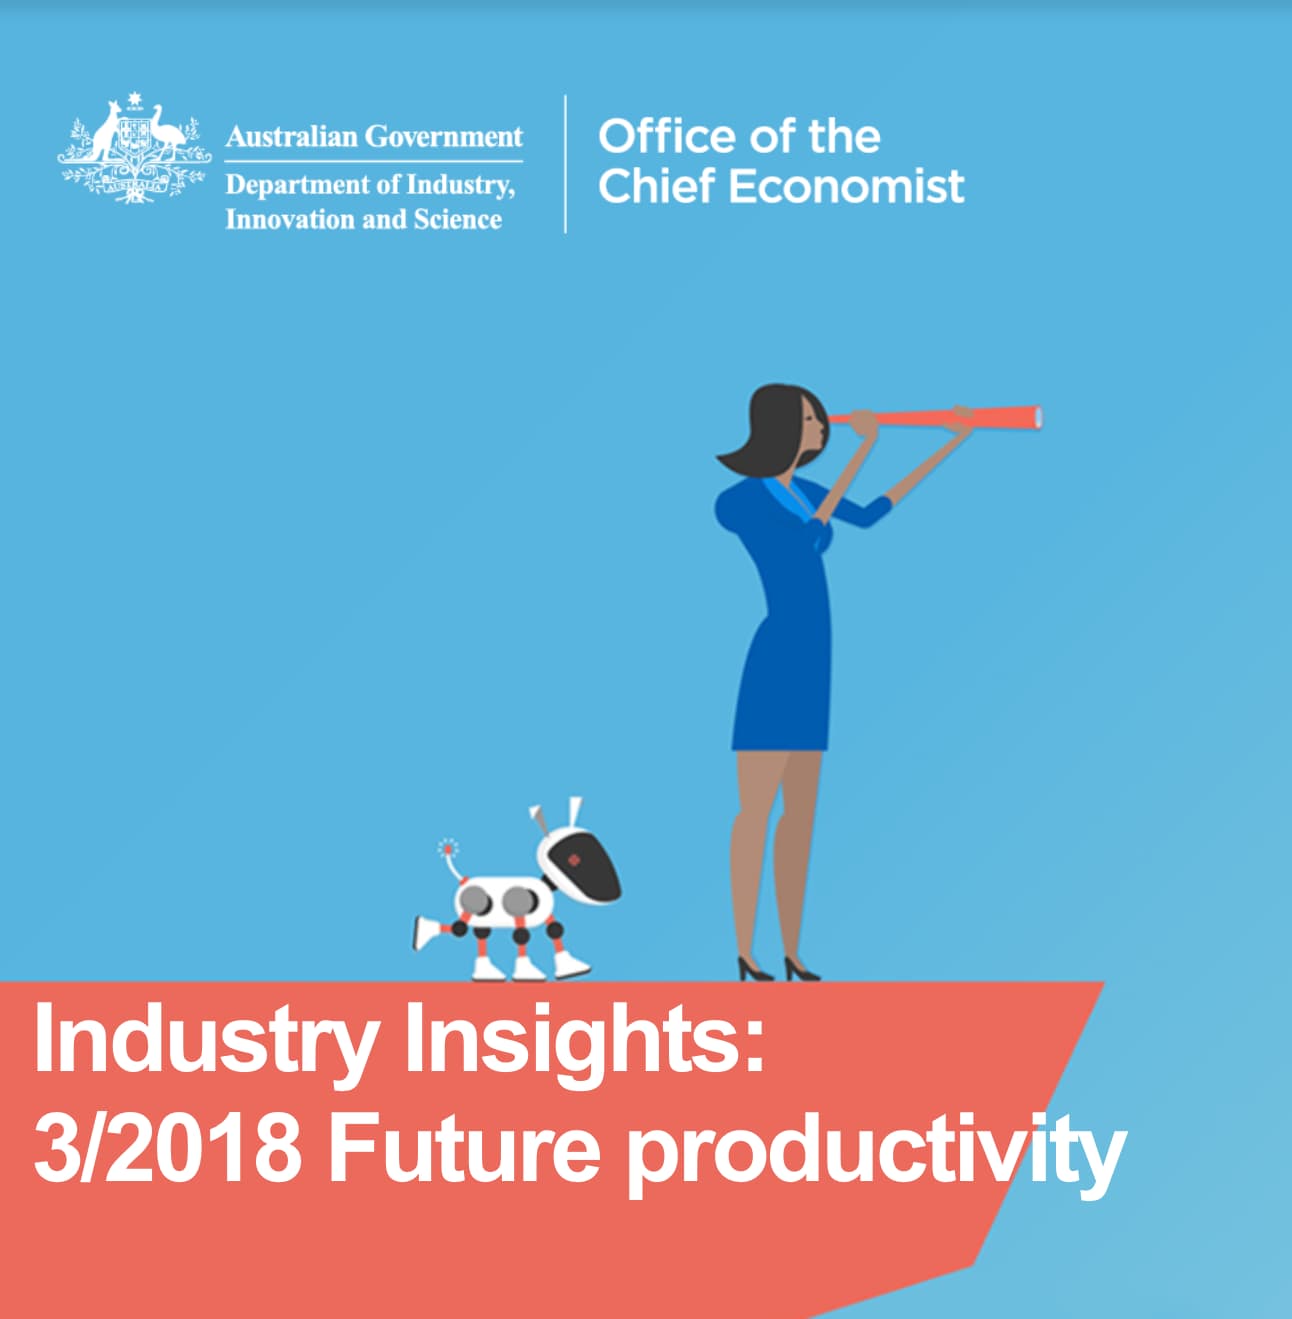 Industry Insights: Future productivity 3/2018